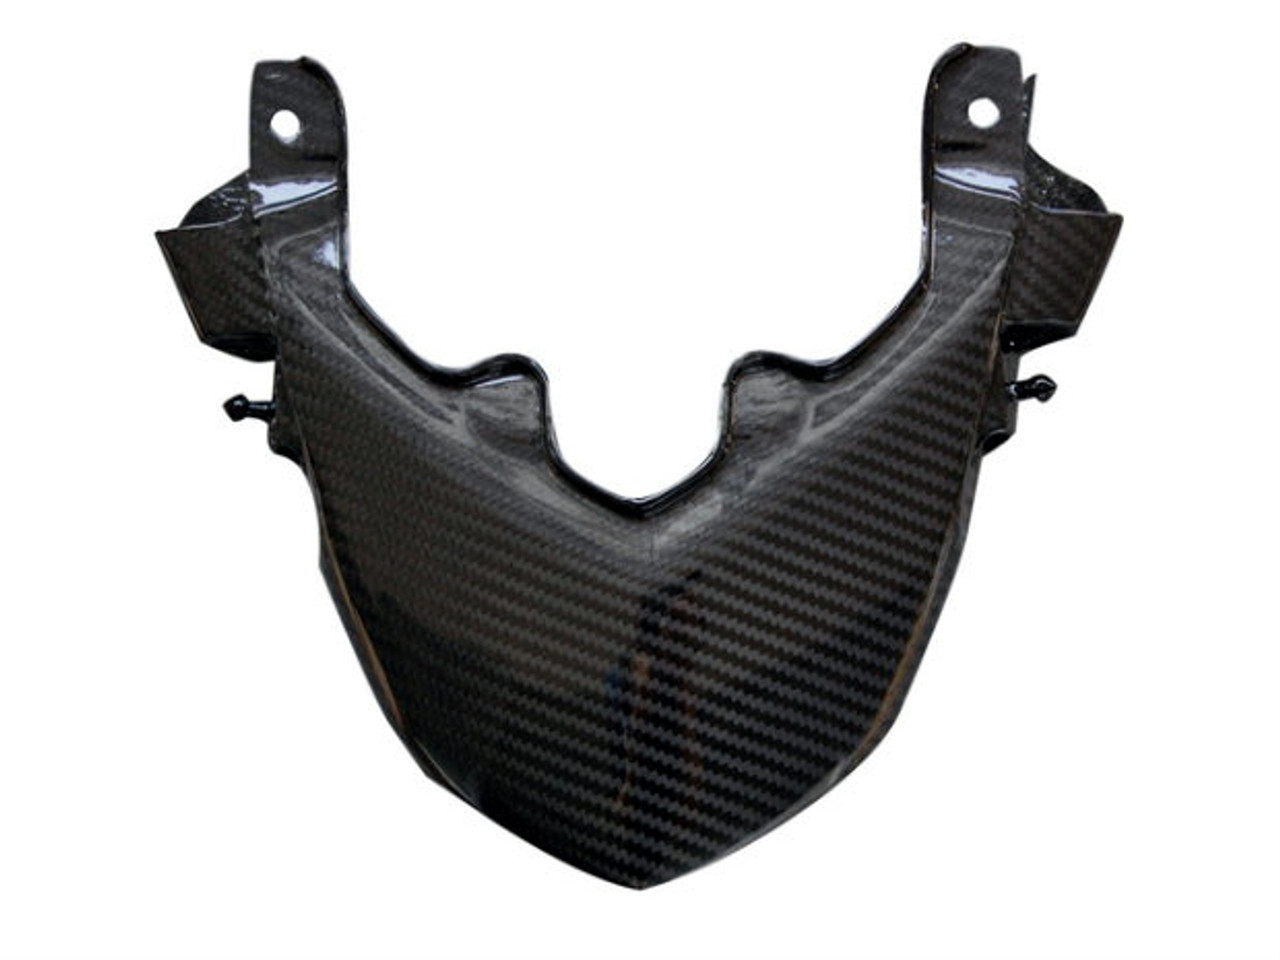 Tail Fairing in Glossy Twill Weave Carbon Fiber for Kawasaki Z750R 07-12